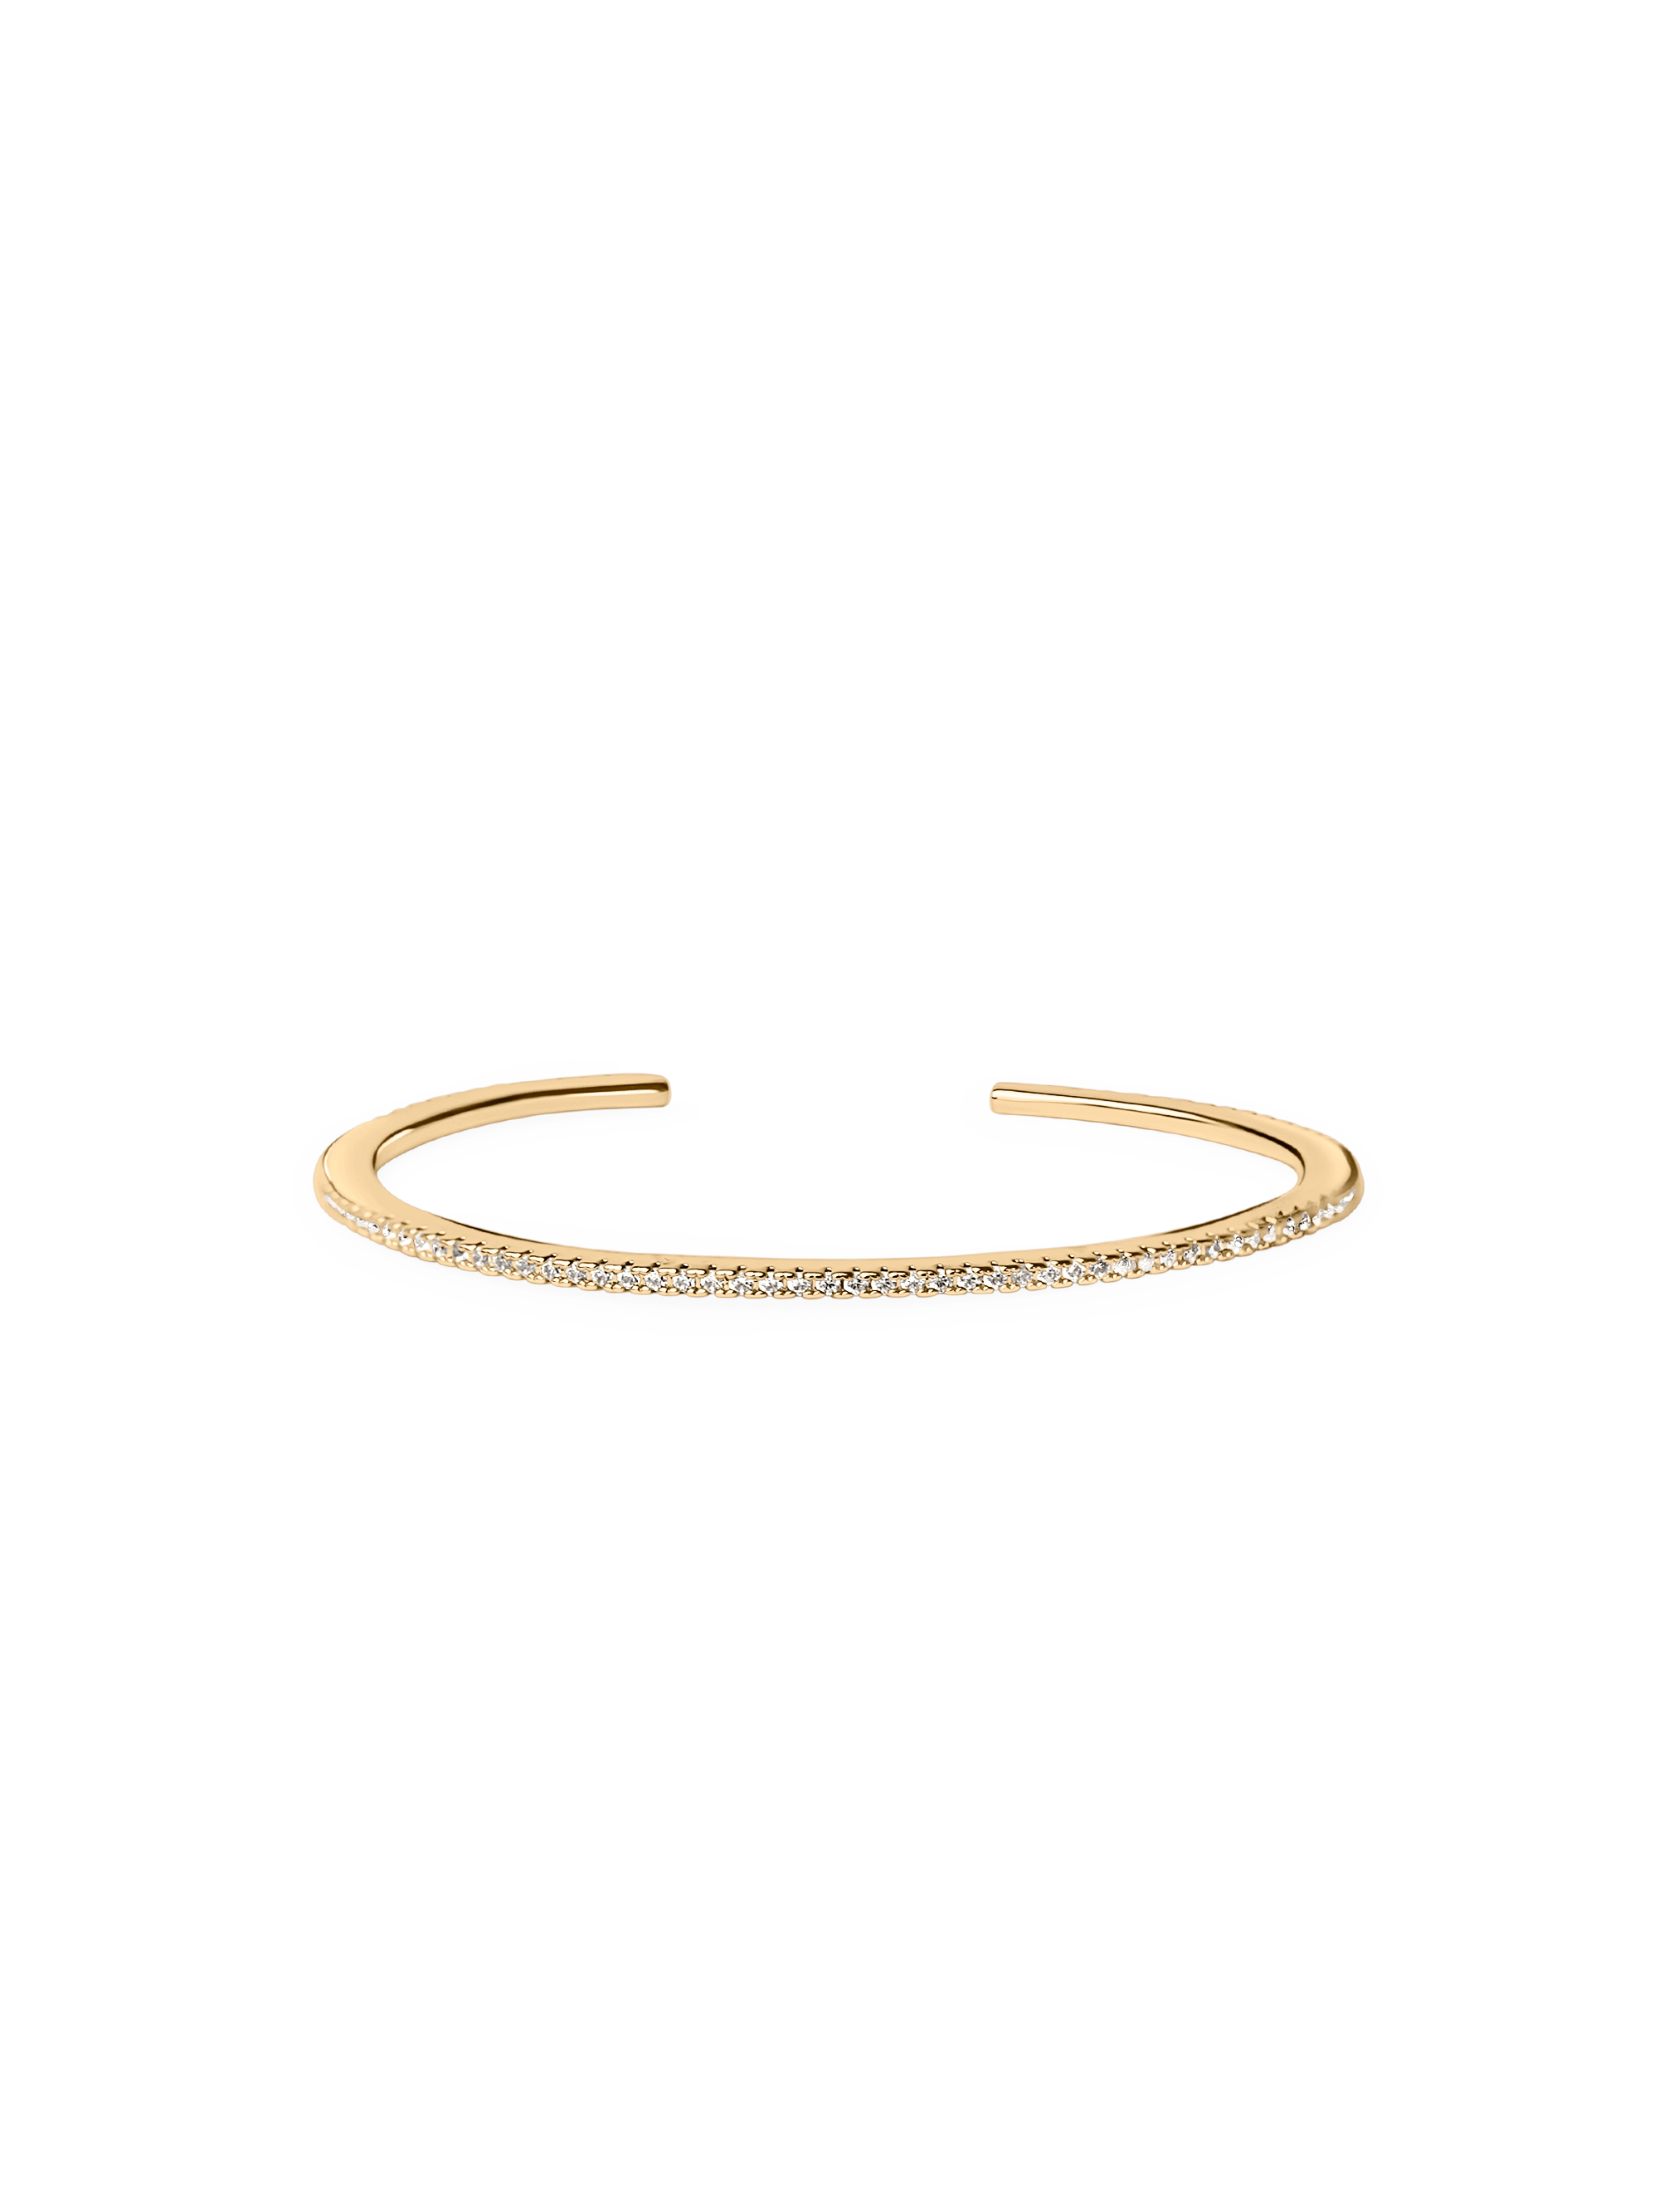 Zirconia bangle bracelet made in 18k gold plated brass